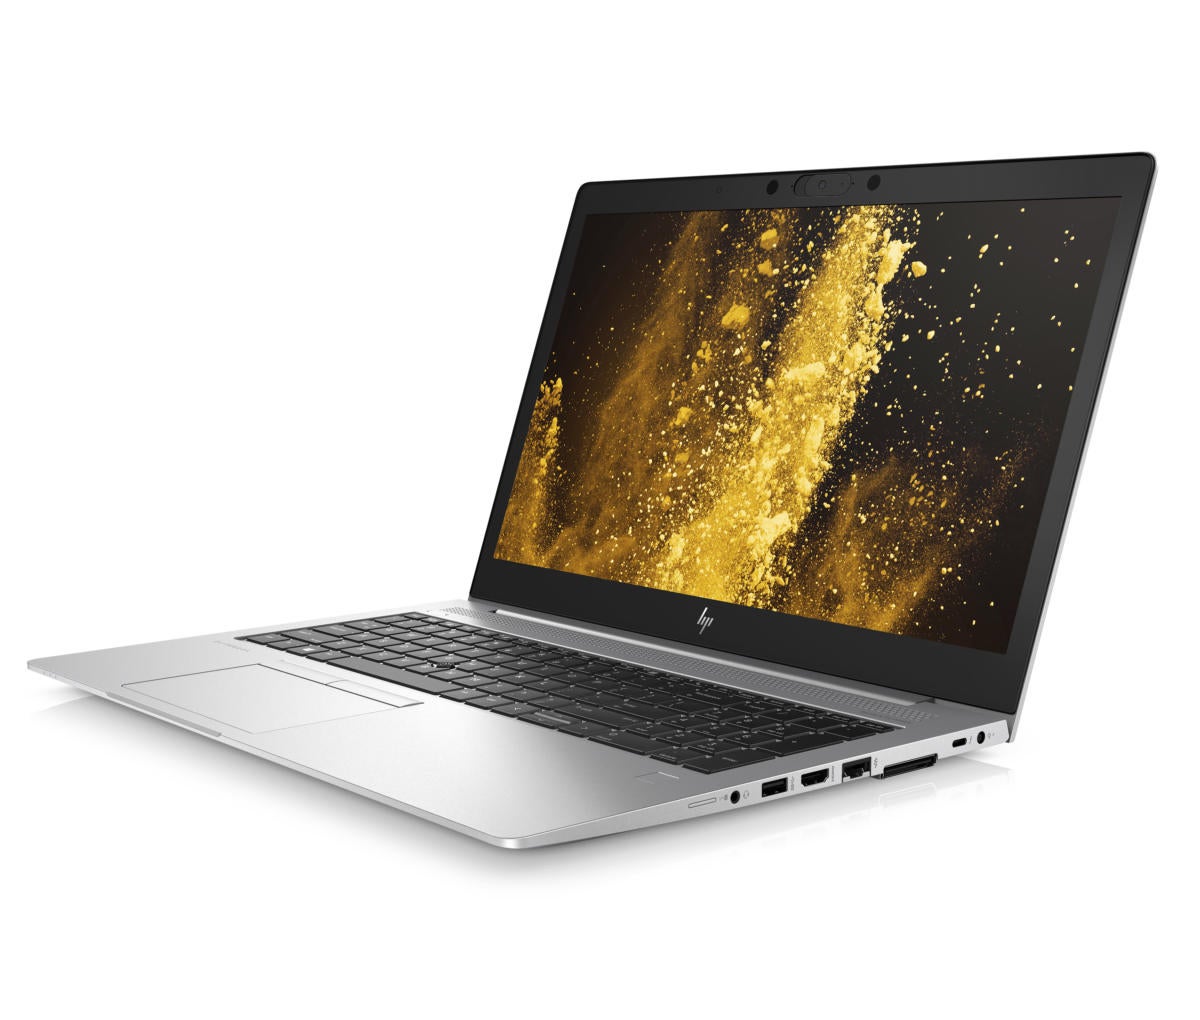  HP  s EliteBook  800 G6 notebook series adds convenience 